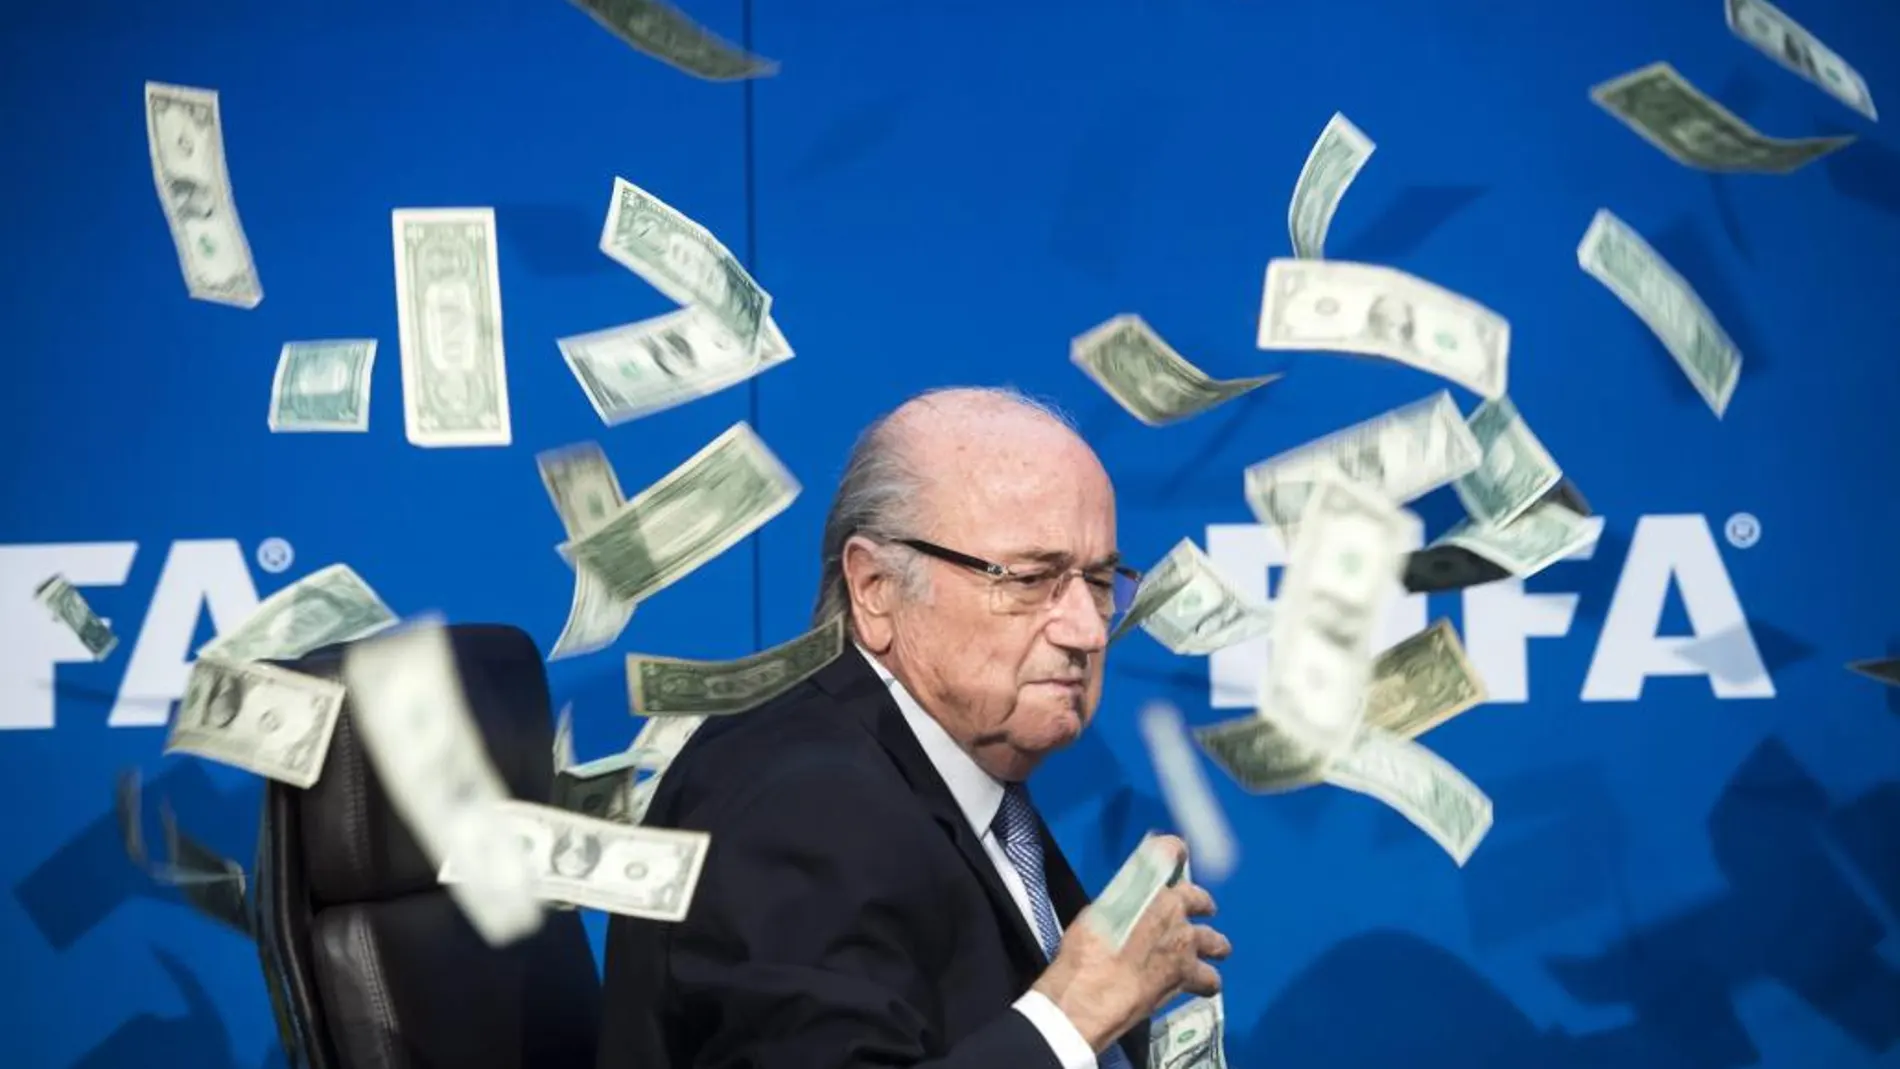 El presidente de la FIFA, Joseph Blatter, bajo una lluvia de billetes